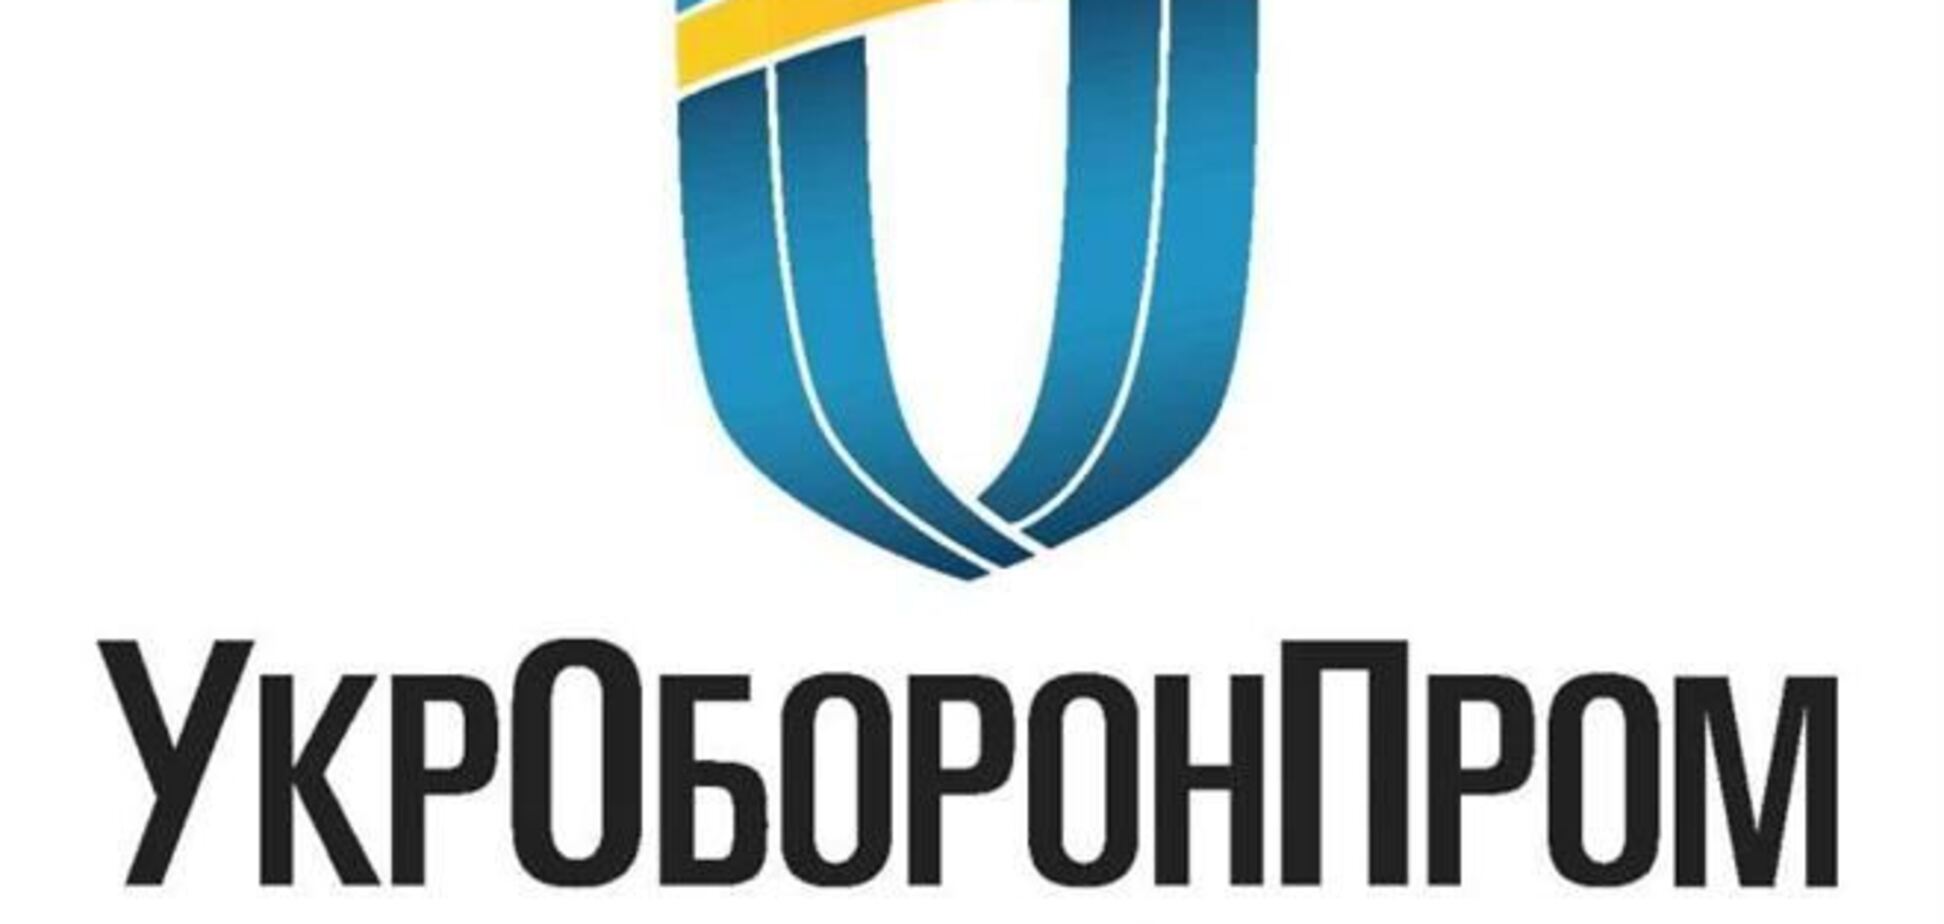 Призначено нового голову 'Укроборонпрому'